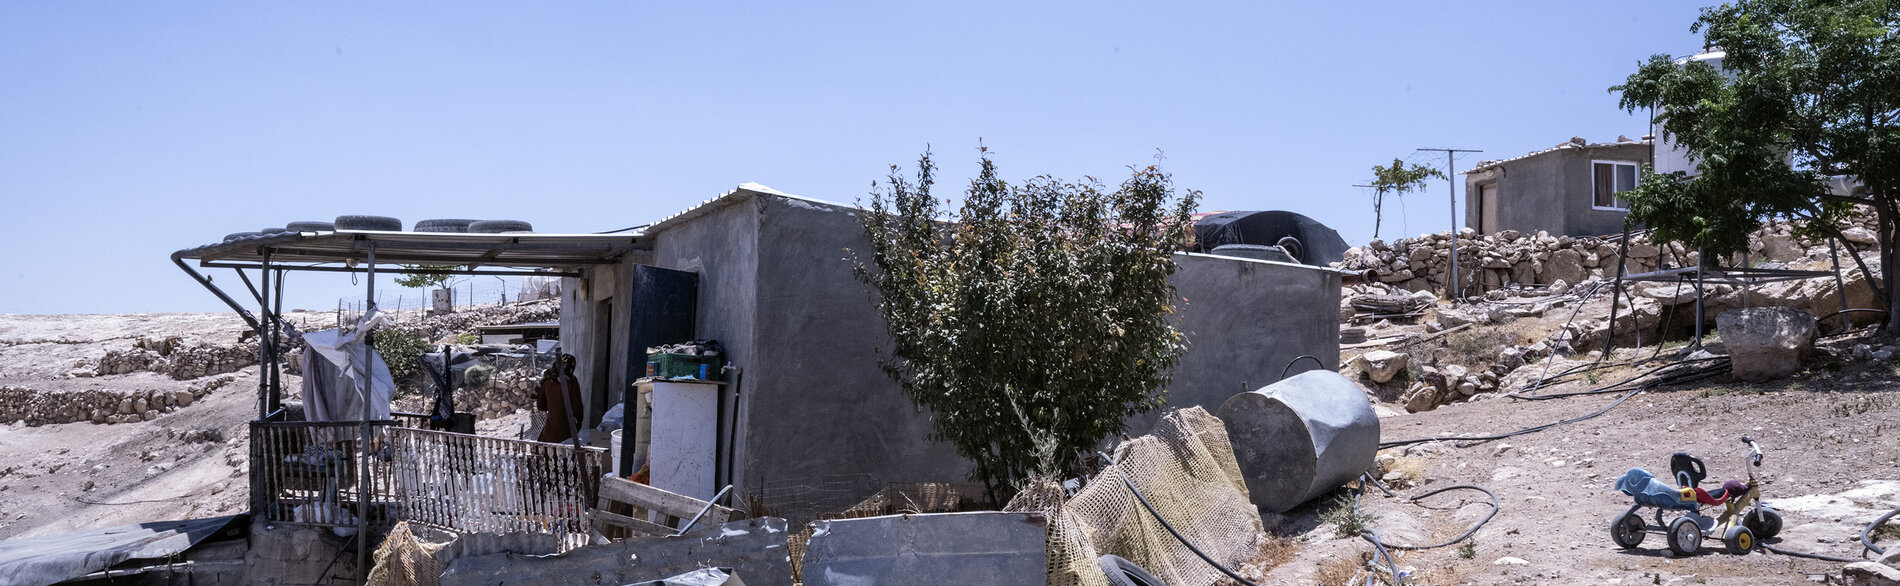 A home in Masafer Yatta. Photo by Tanya Habjouqa/OCHA